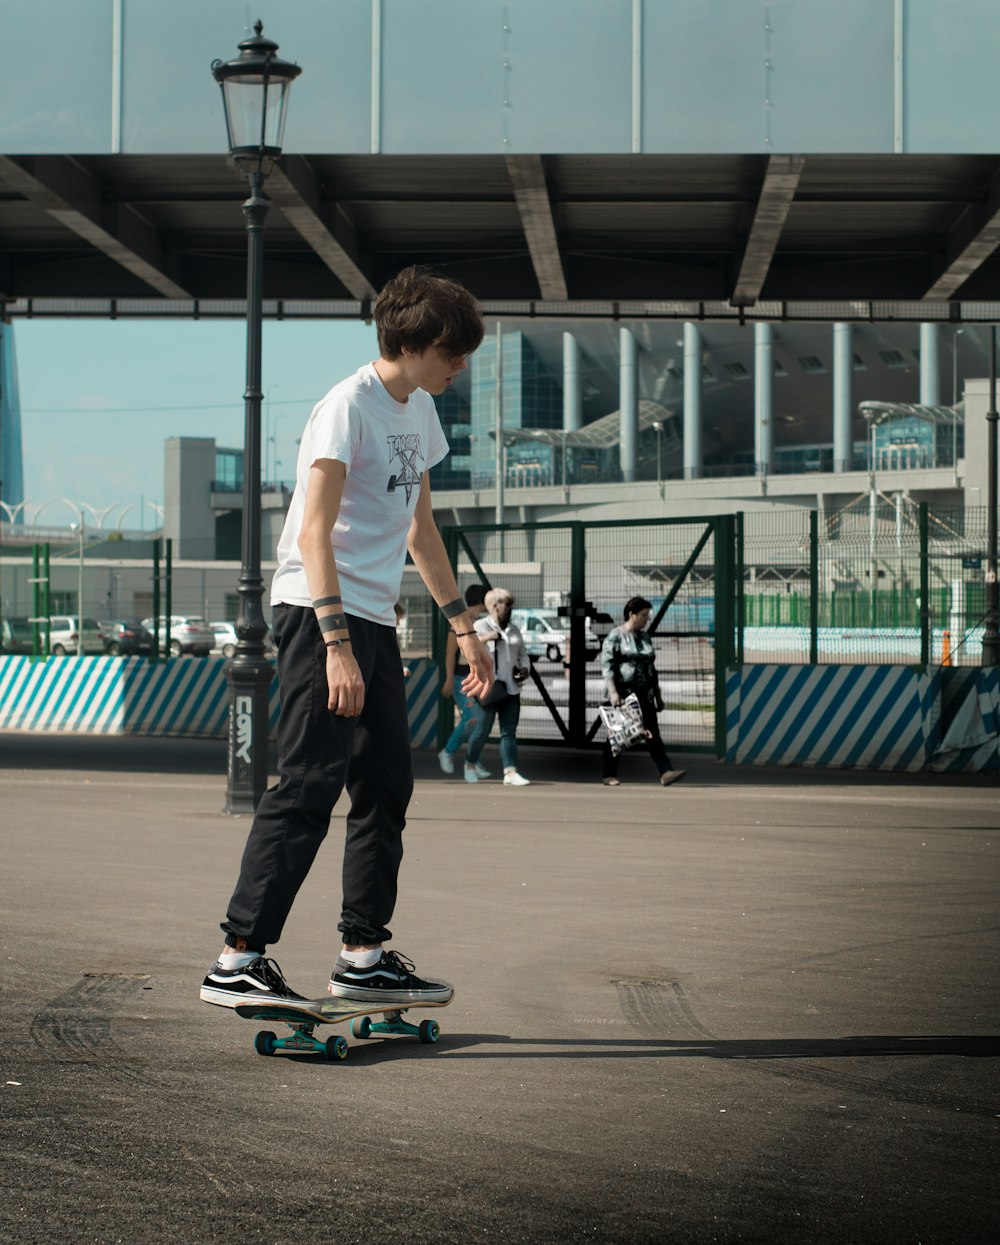 man riding on black skateboard beside gray building